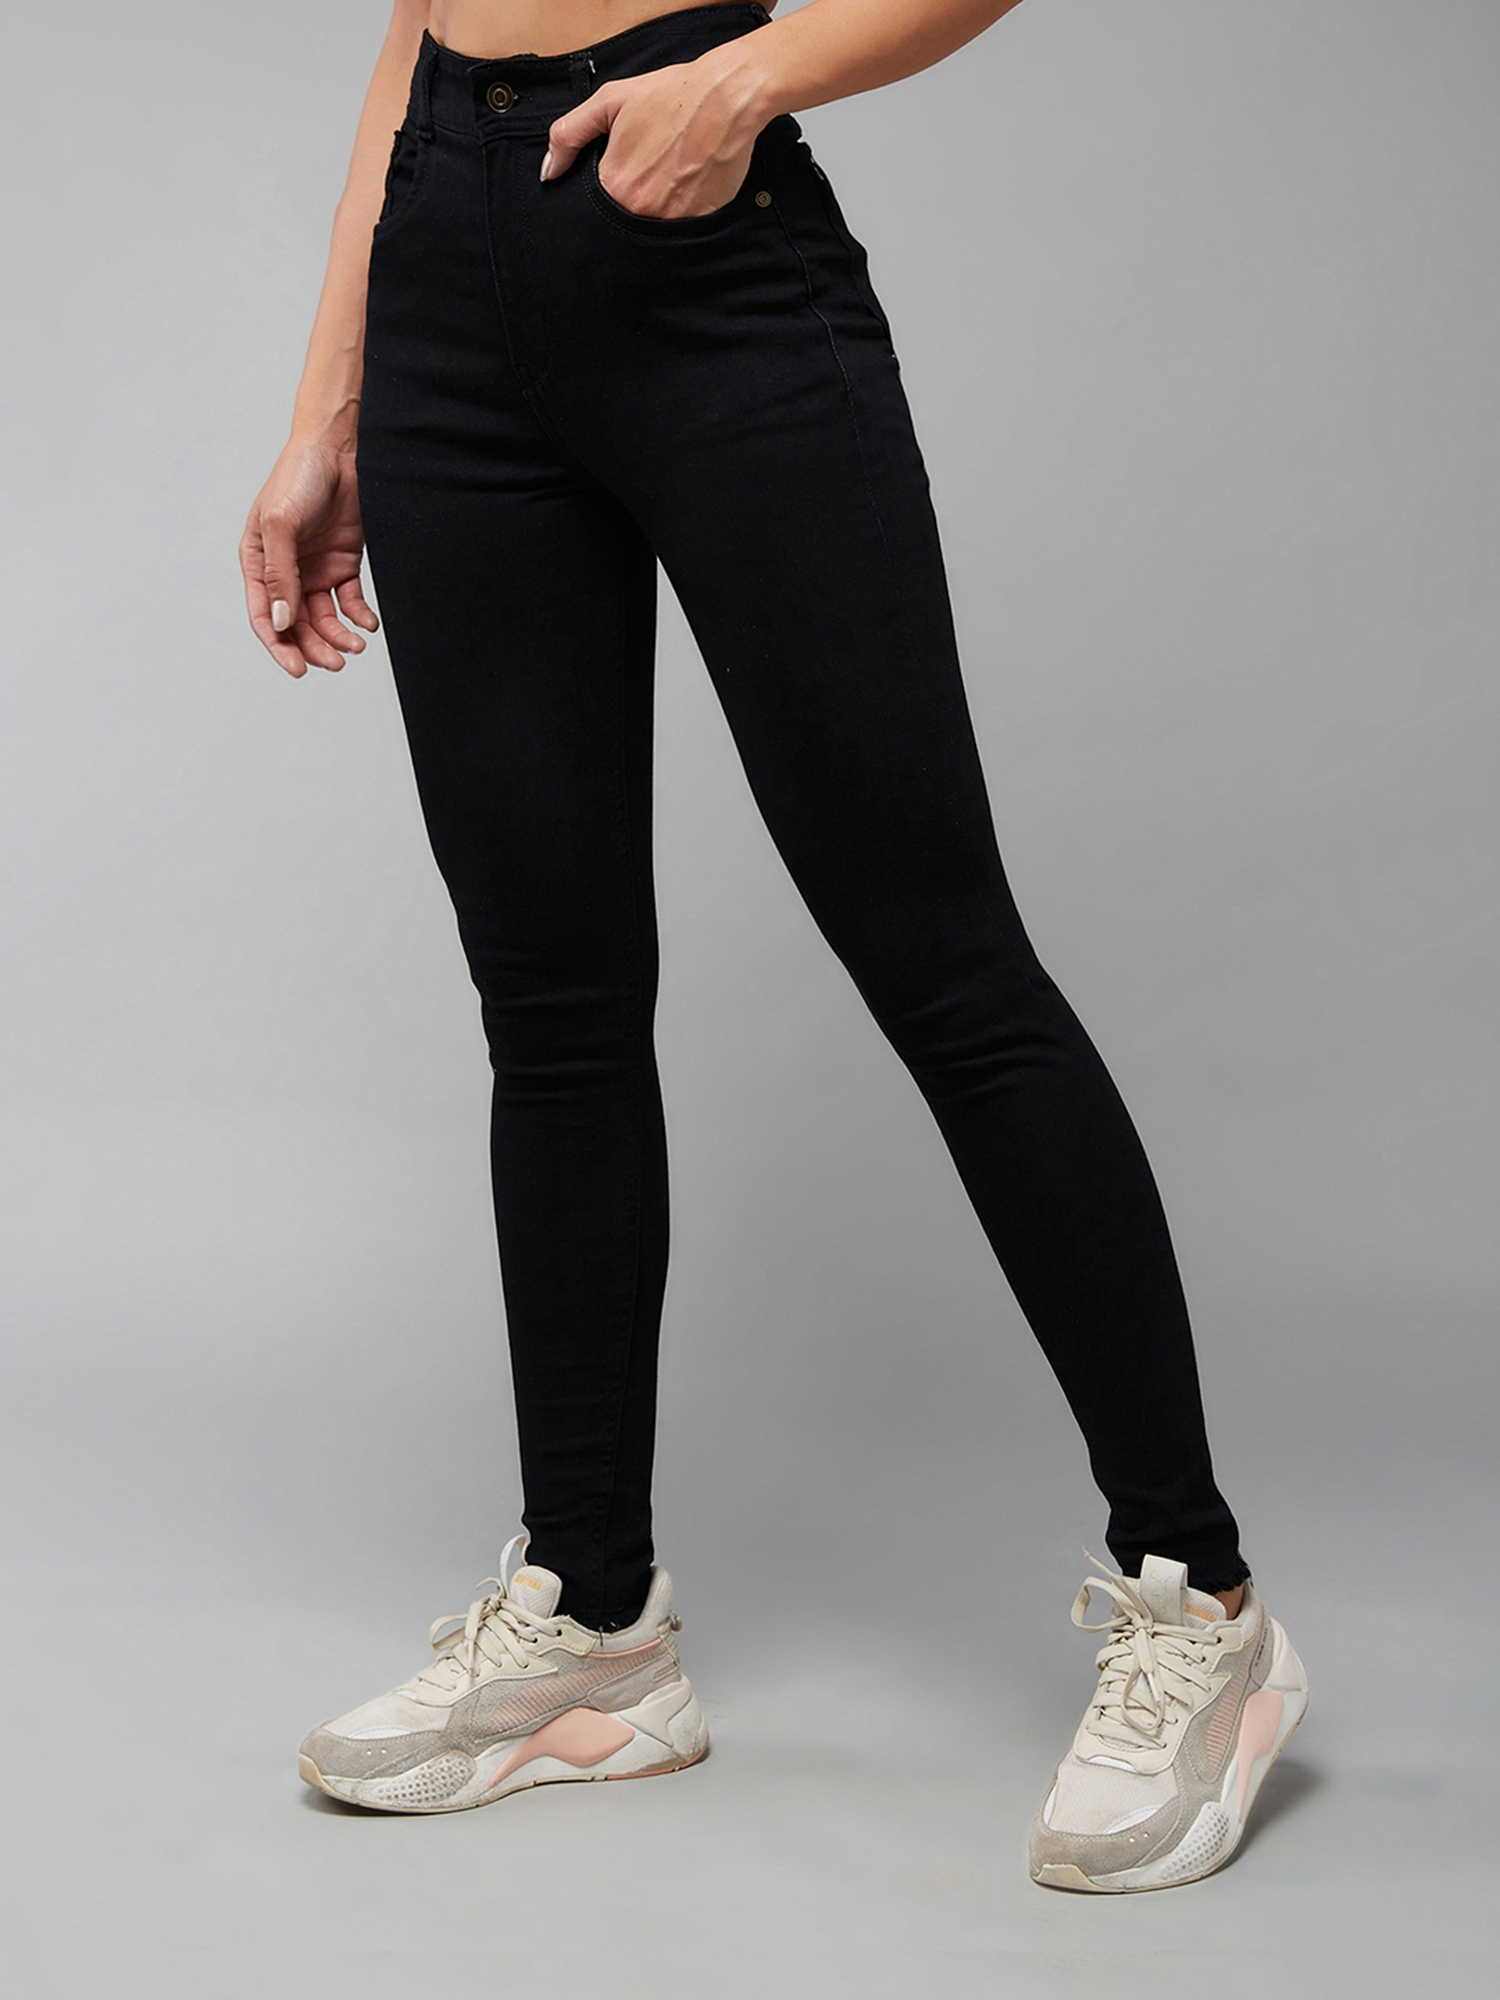 Women's Black Slim Fit Regular Length High Rise Denim Jeans